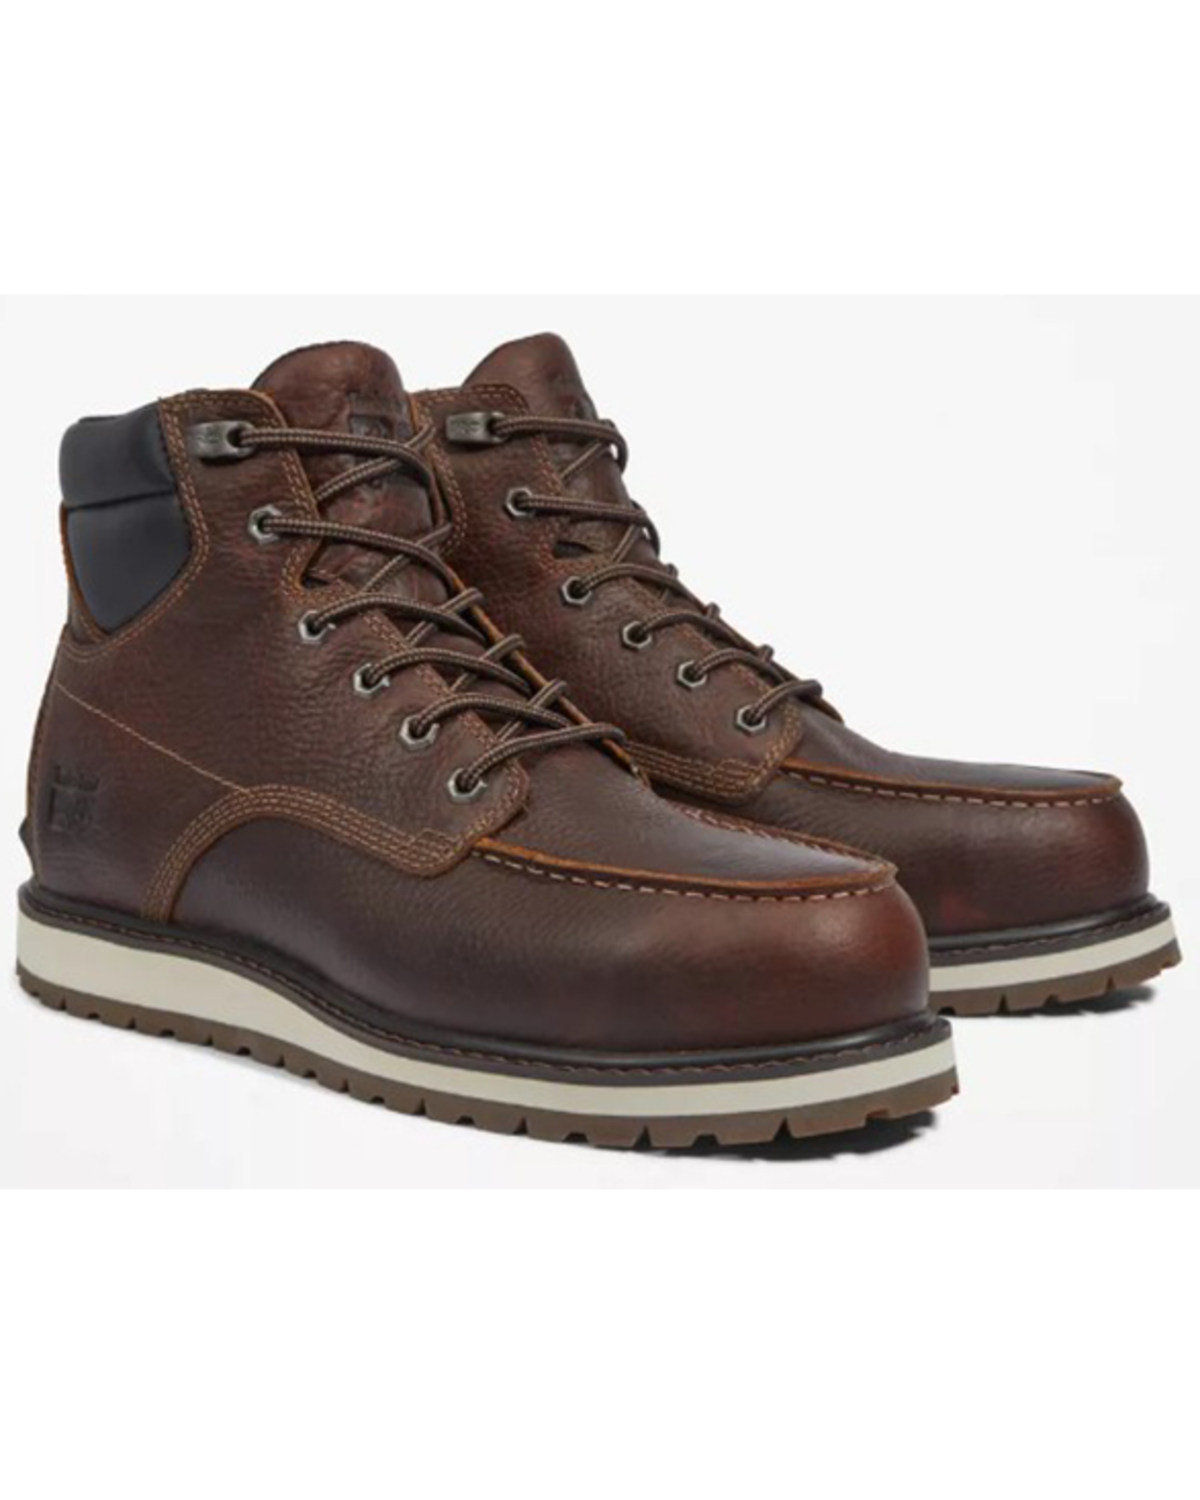 Timberland Men's 6" Irvine Work Boots - Alloy Toe